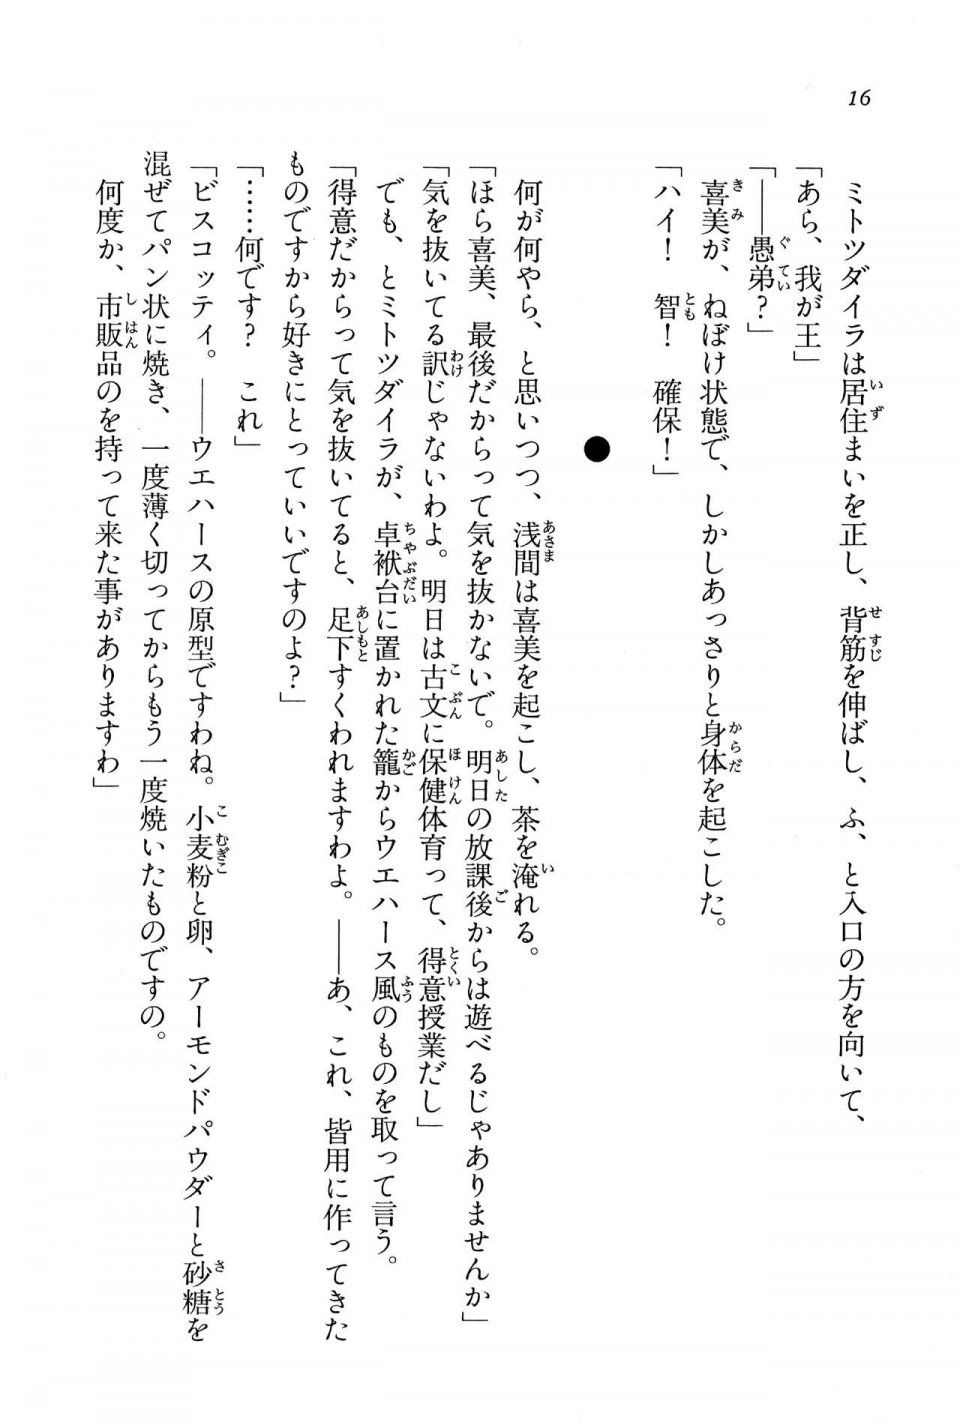 Kyoukai Senjou no Horizon BD Special Mininovel Vol 7(4A) - Photo #20